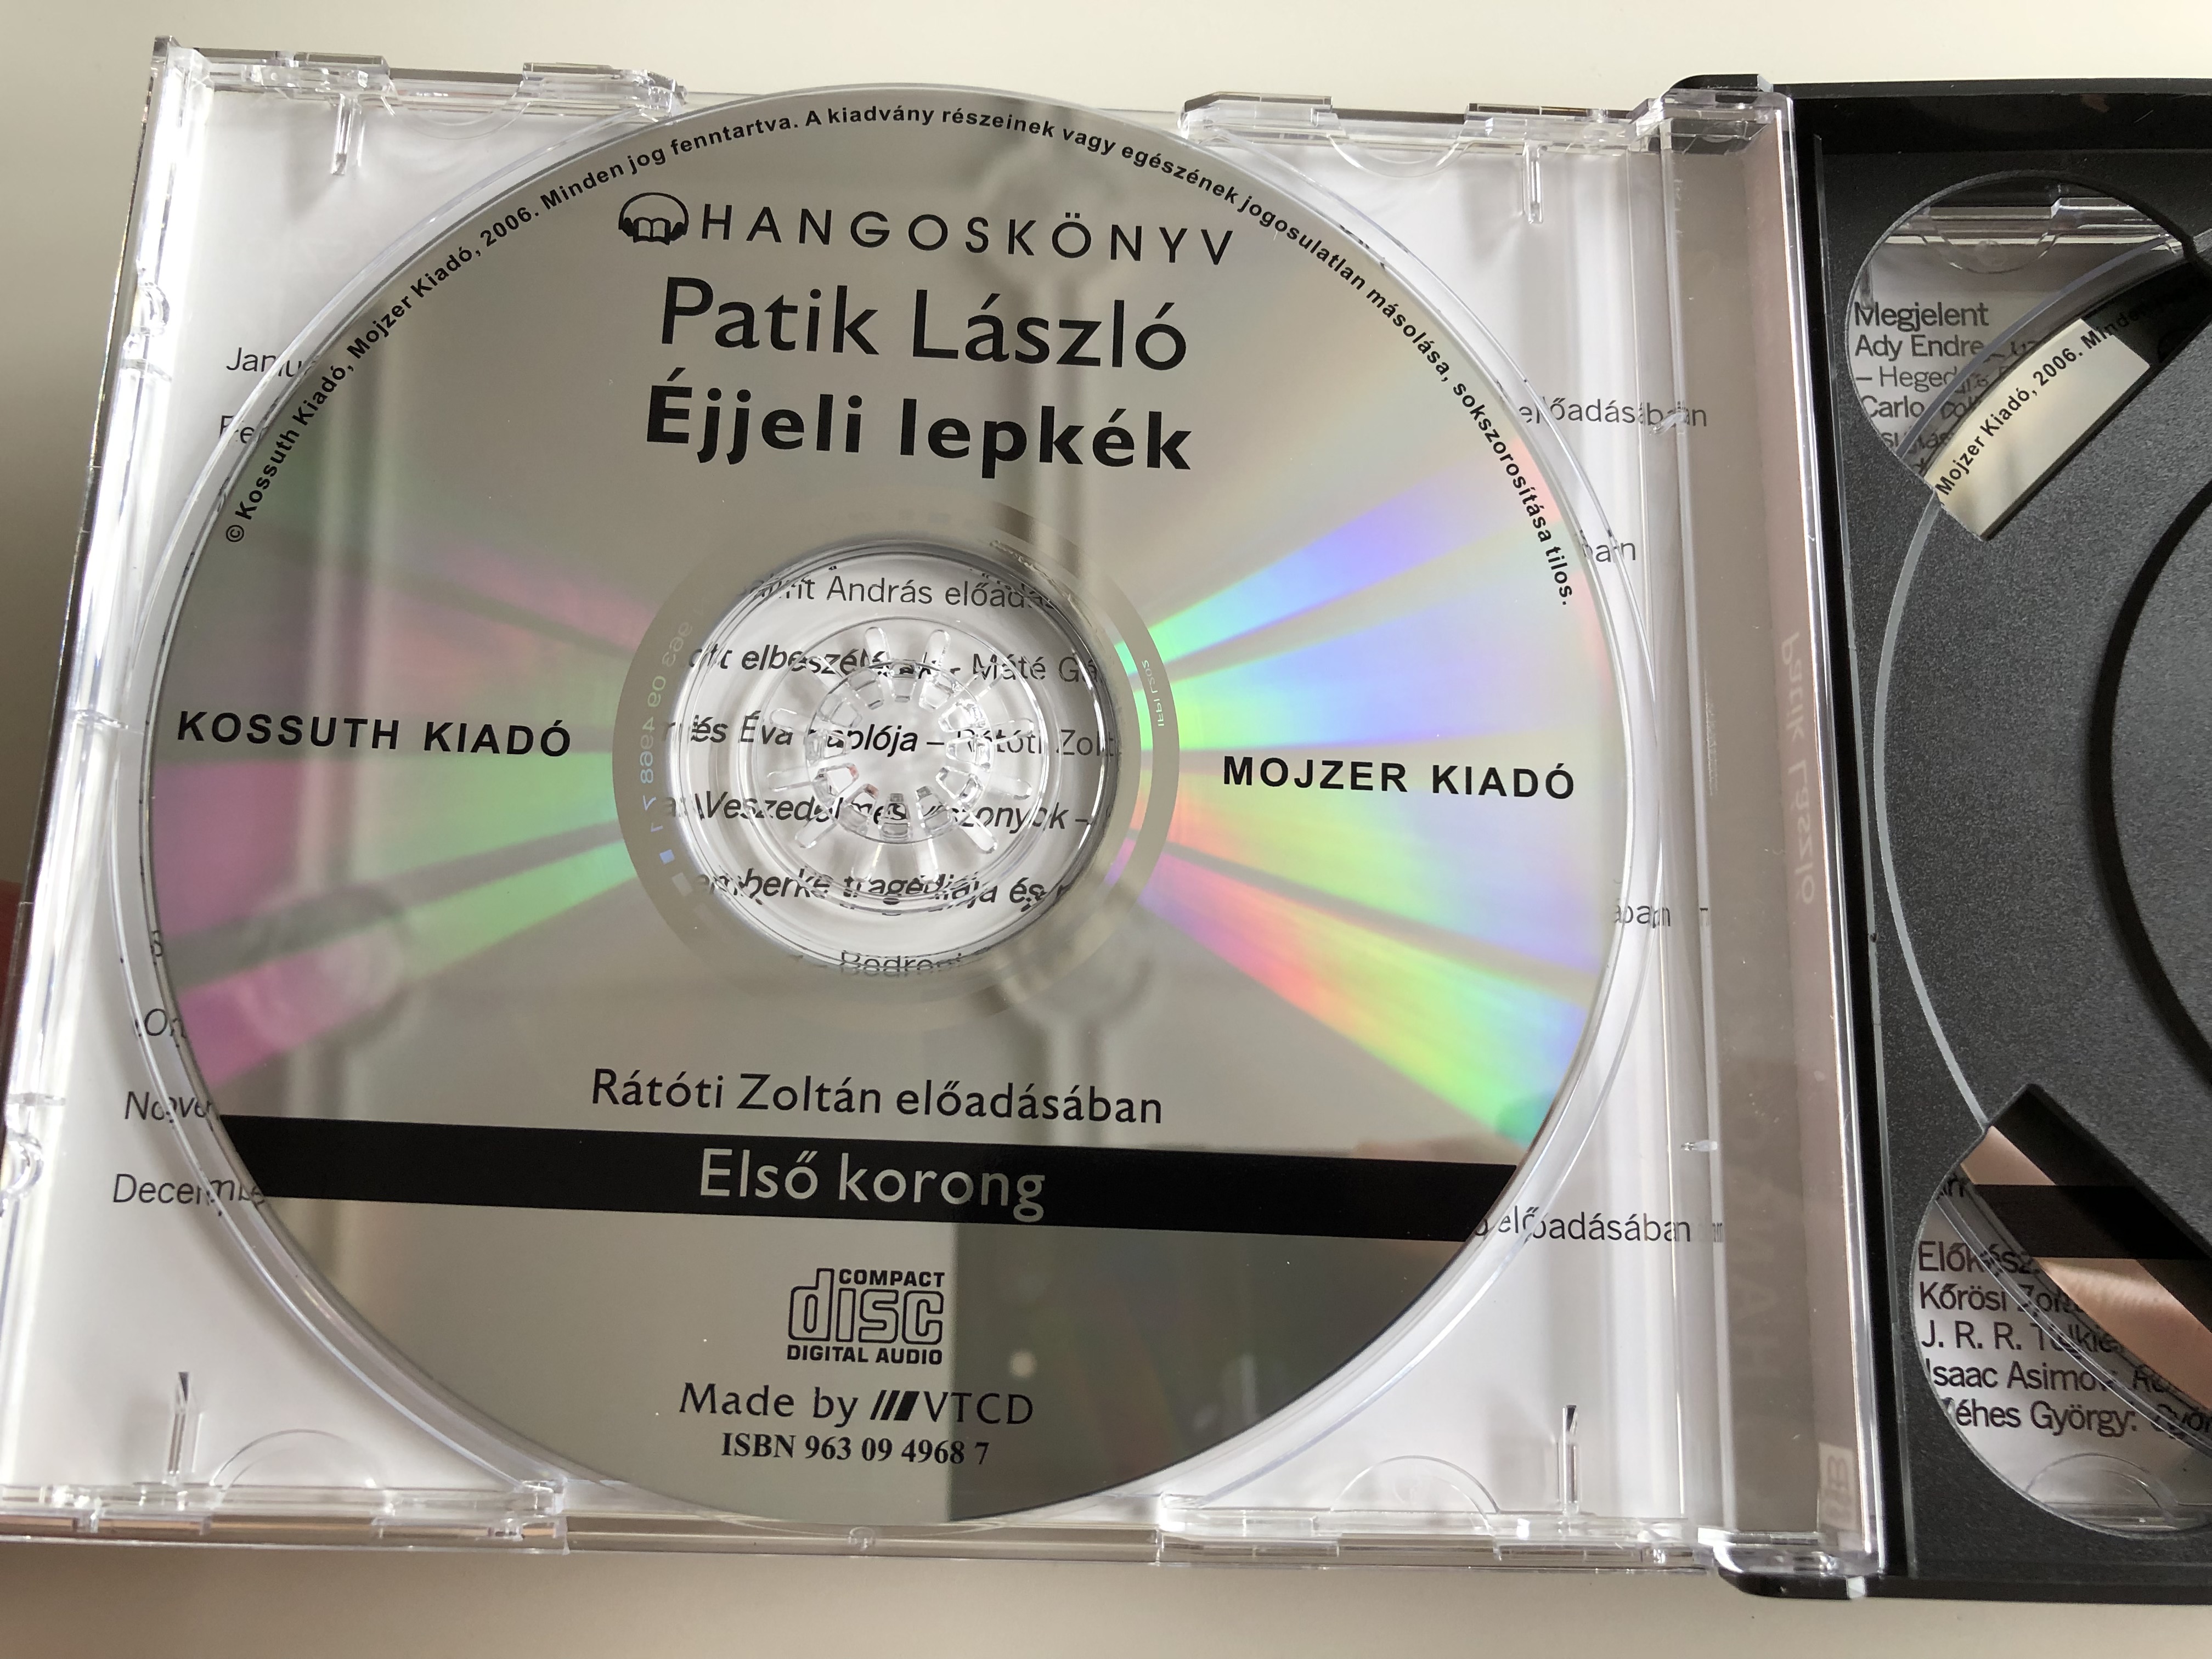 patik-l-szl-jjeli-lepk-k-read-by-r-t-ti-zolt-n-2cd-audio-book-2006-kossuth-mojzer-kiad-2-.jpg